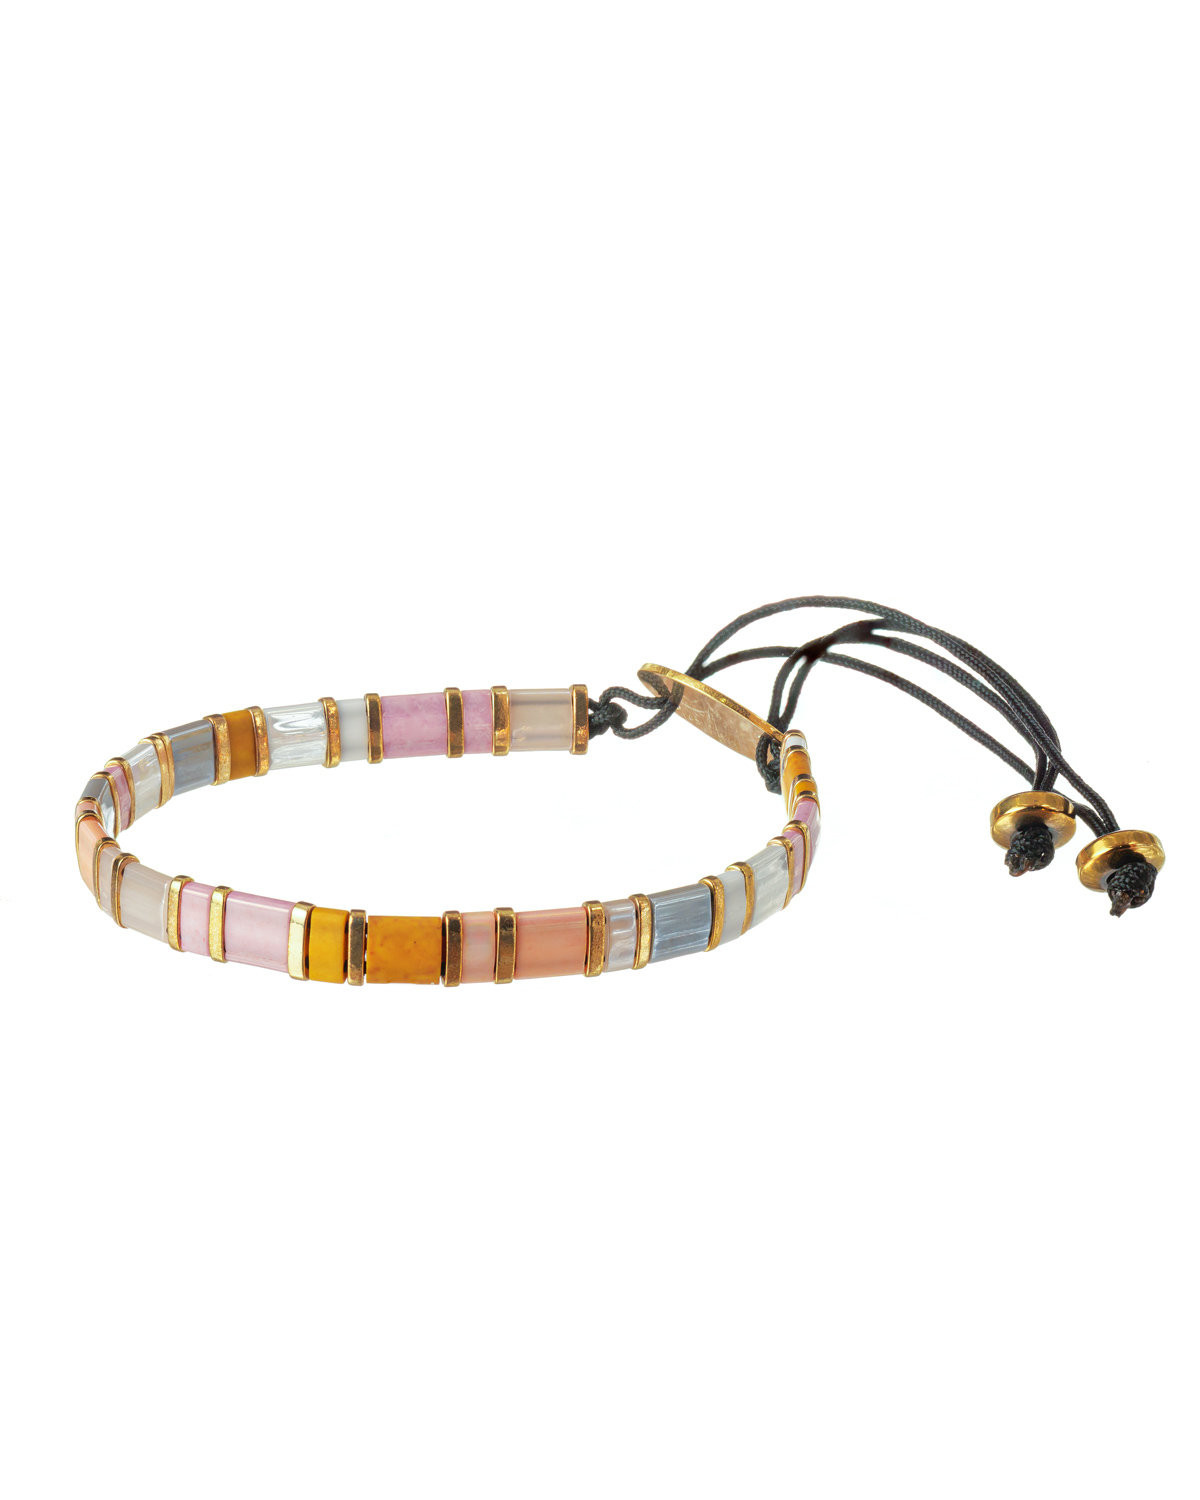 Bracelet with rose, white, light blue and Gold Miyuki Tila Beads